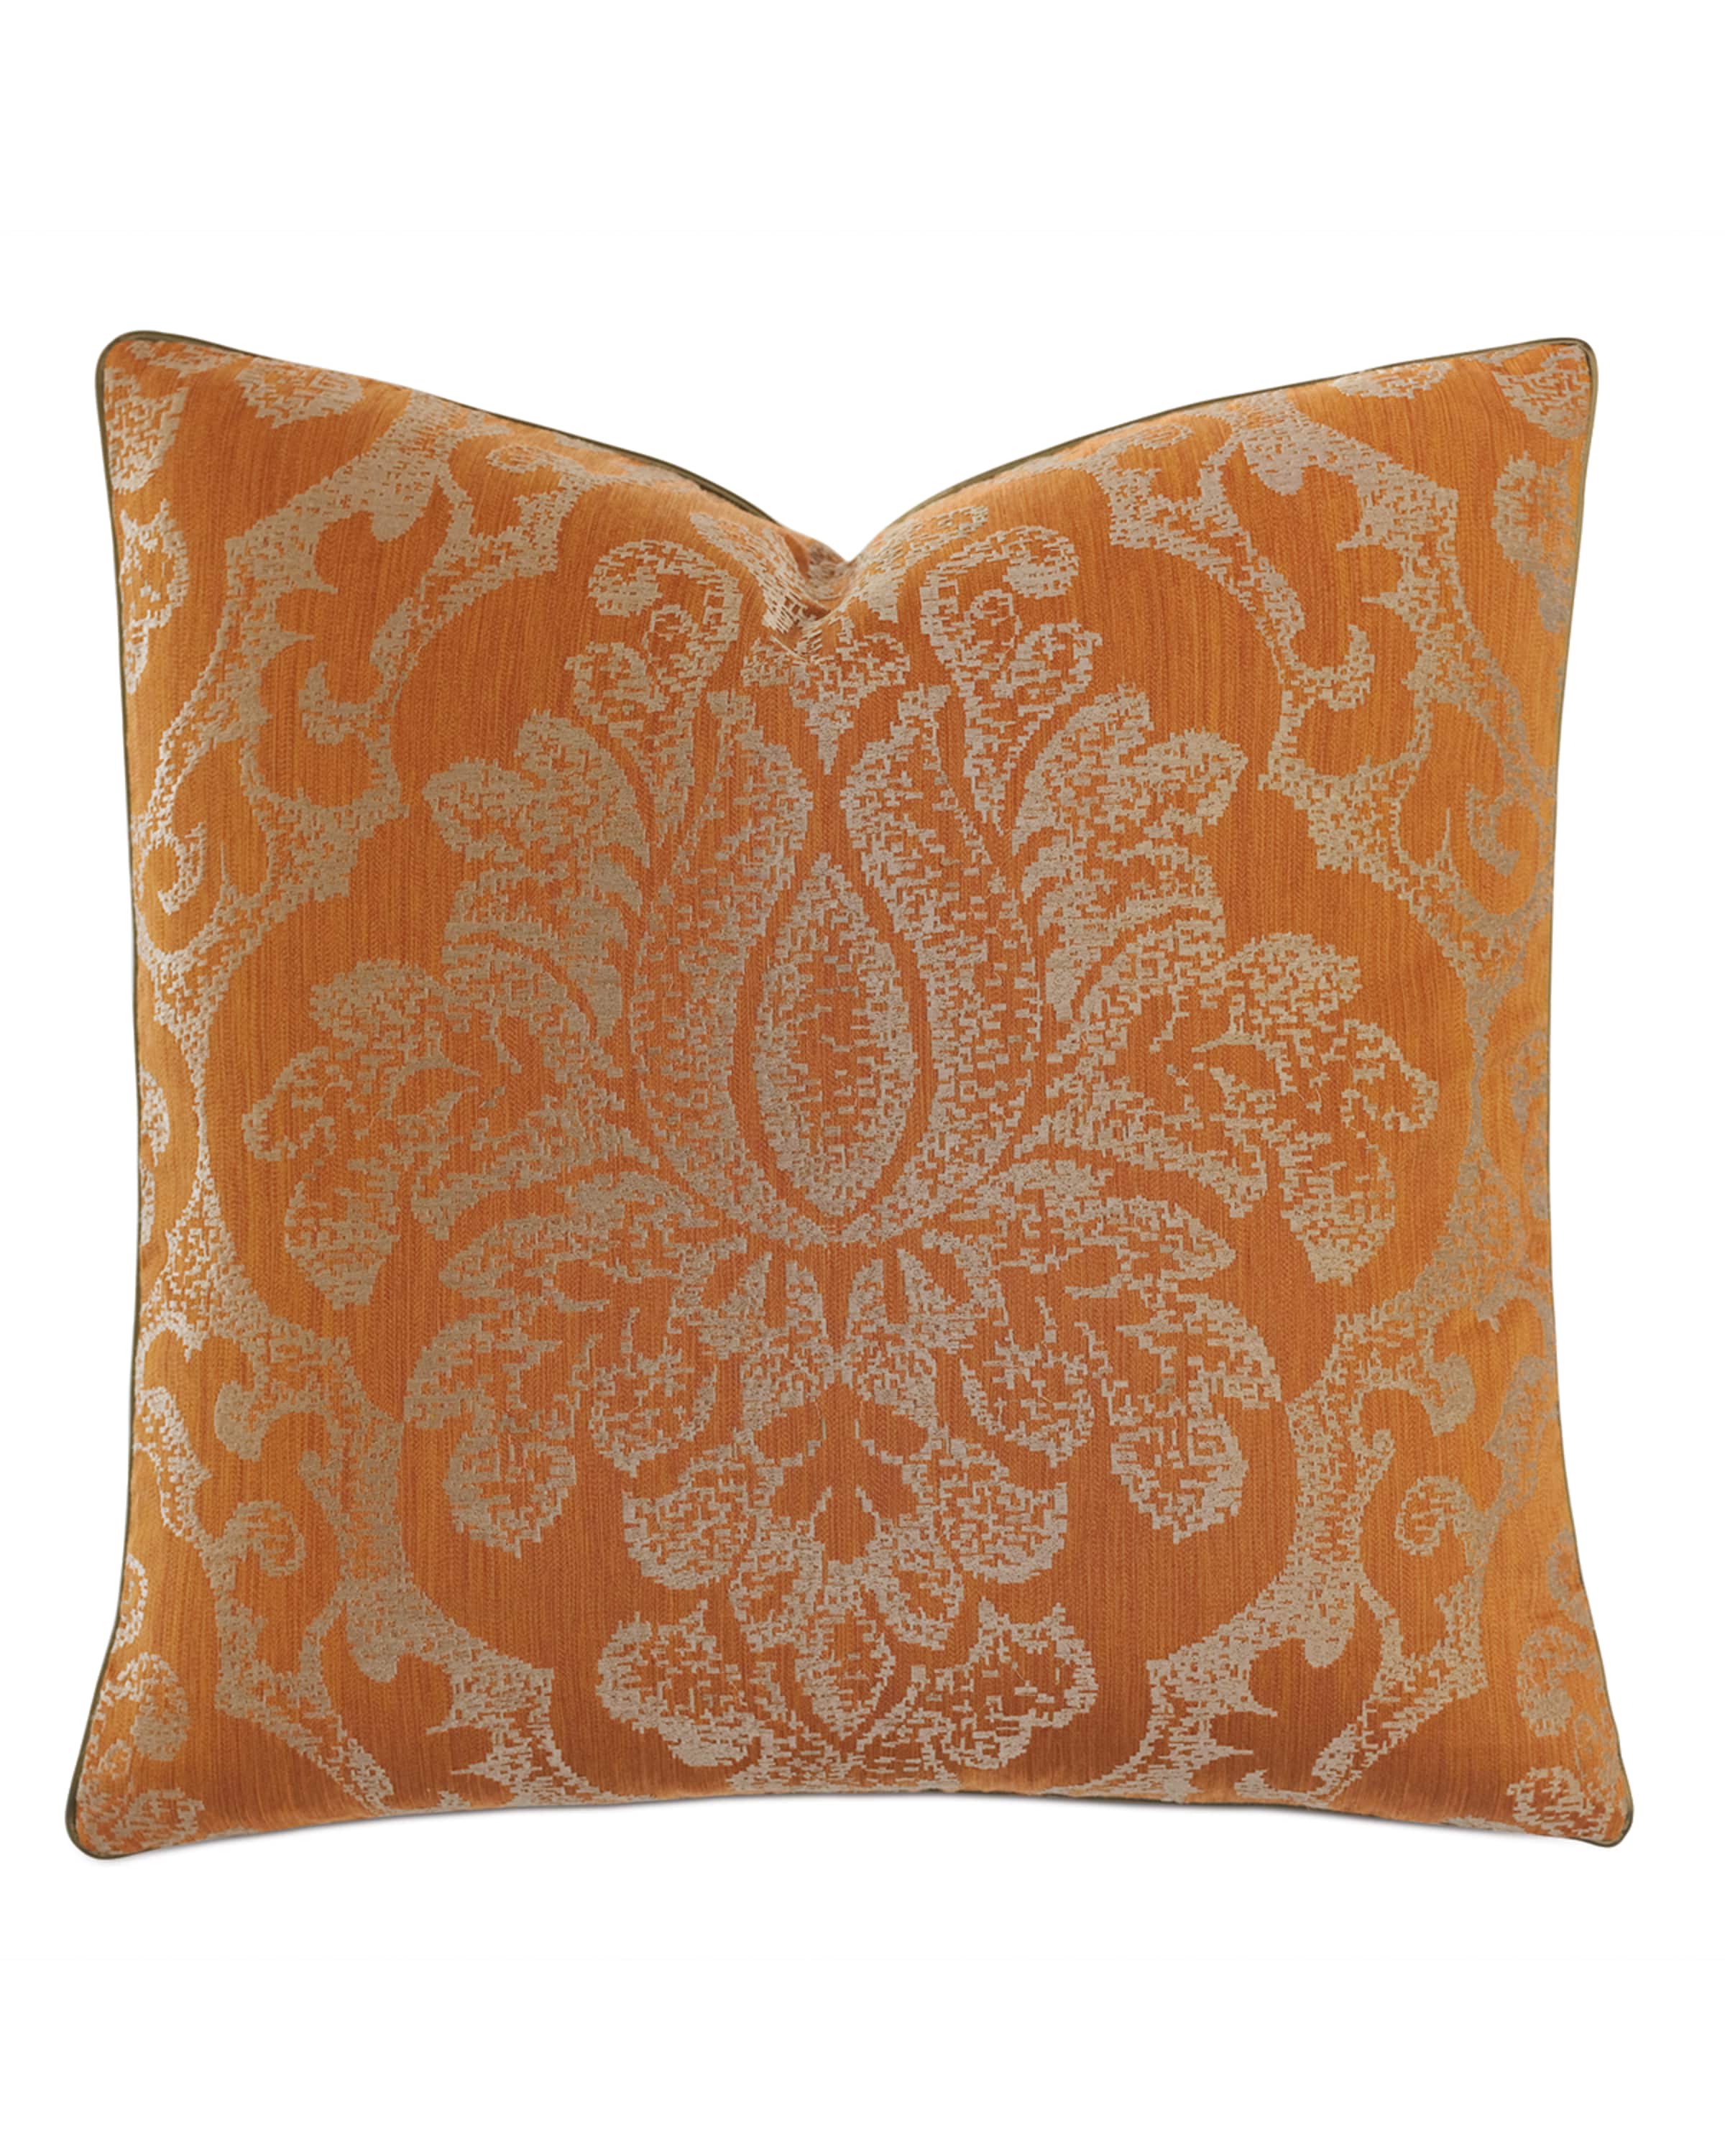 Eastern Accents Ladue Decorative Pillow